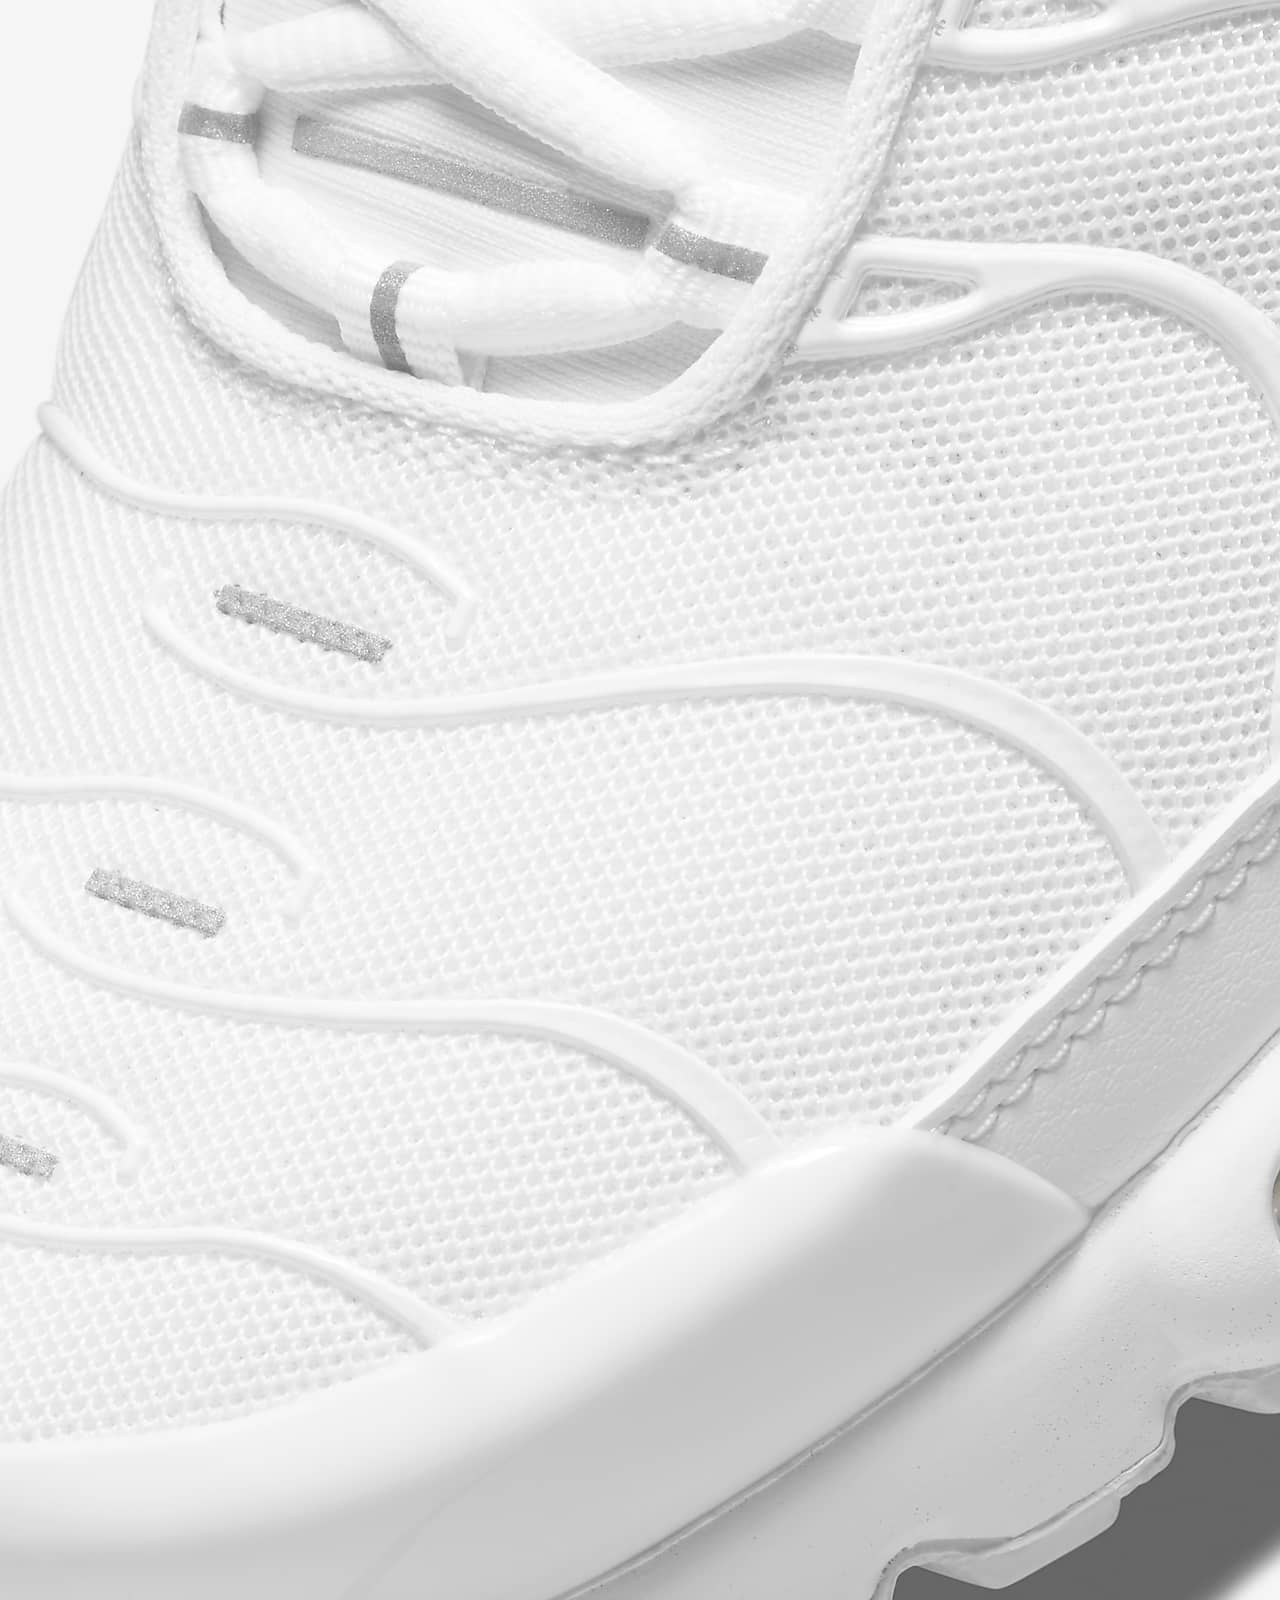 Nike Air Max Plus TN (W) - Femmes Baskets Sneakers Chaussures Blanc  DM2362-100